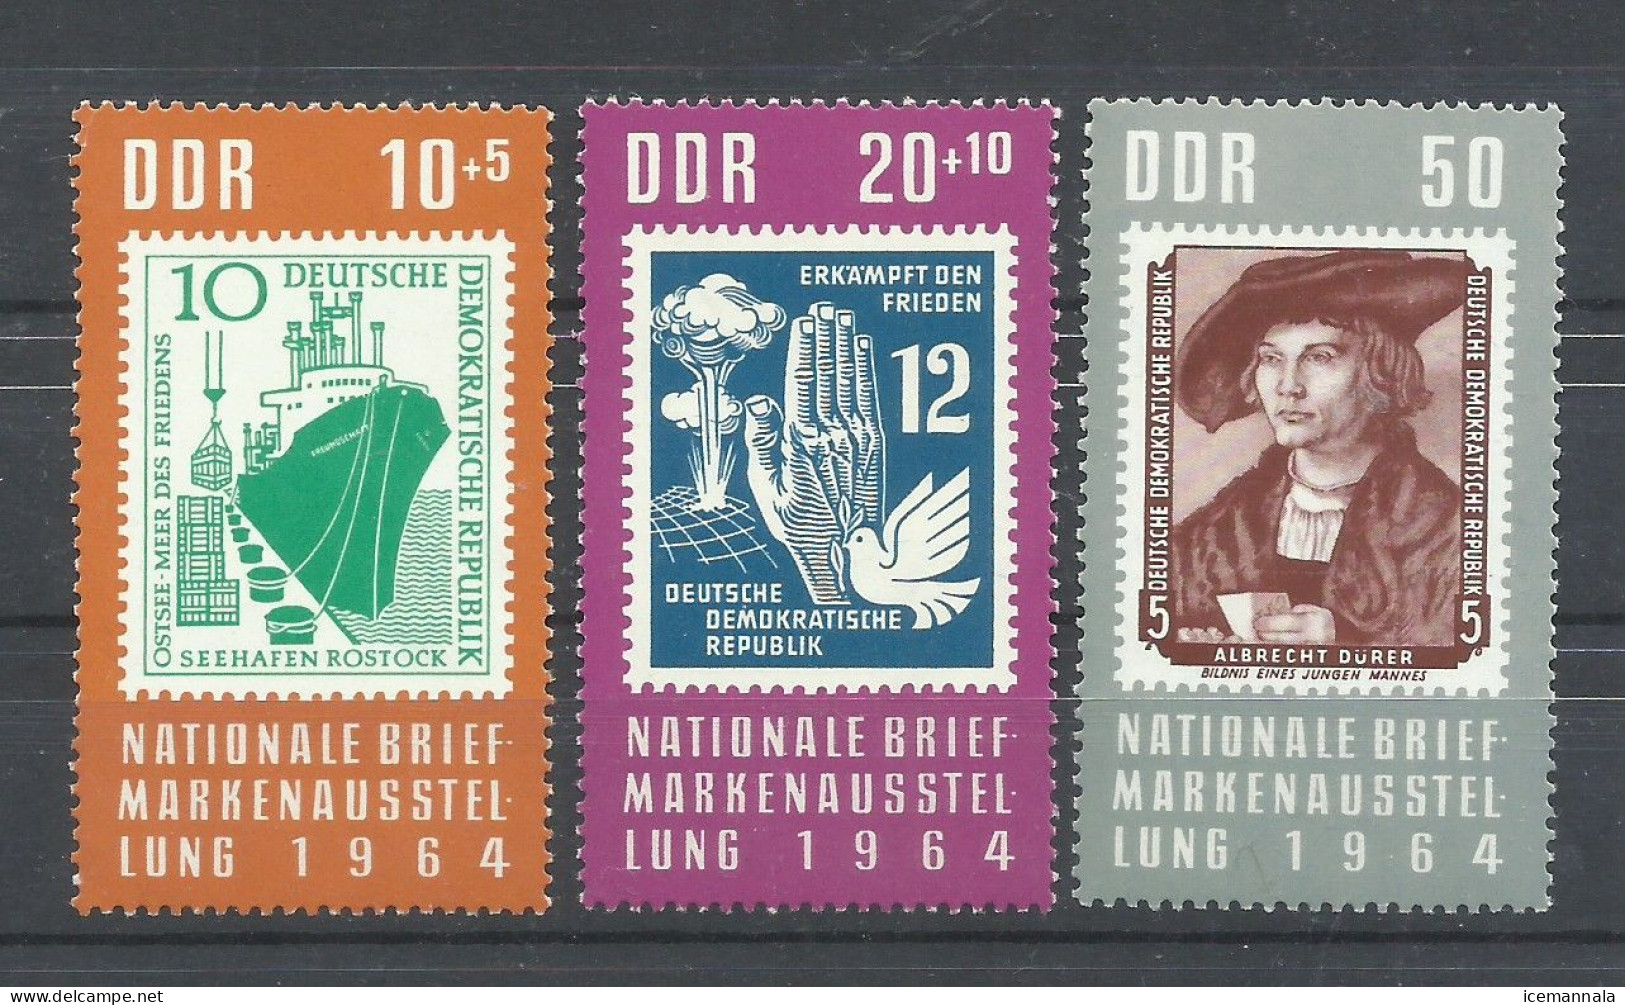 ALEMANIA   ORIENTAL   YVERT  759/61   MNH  ** - Unused Stamps